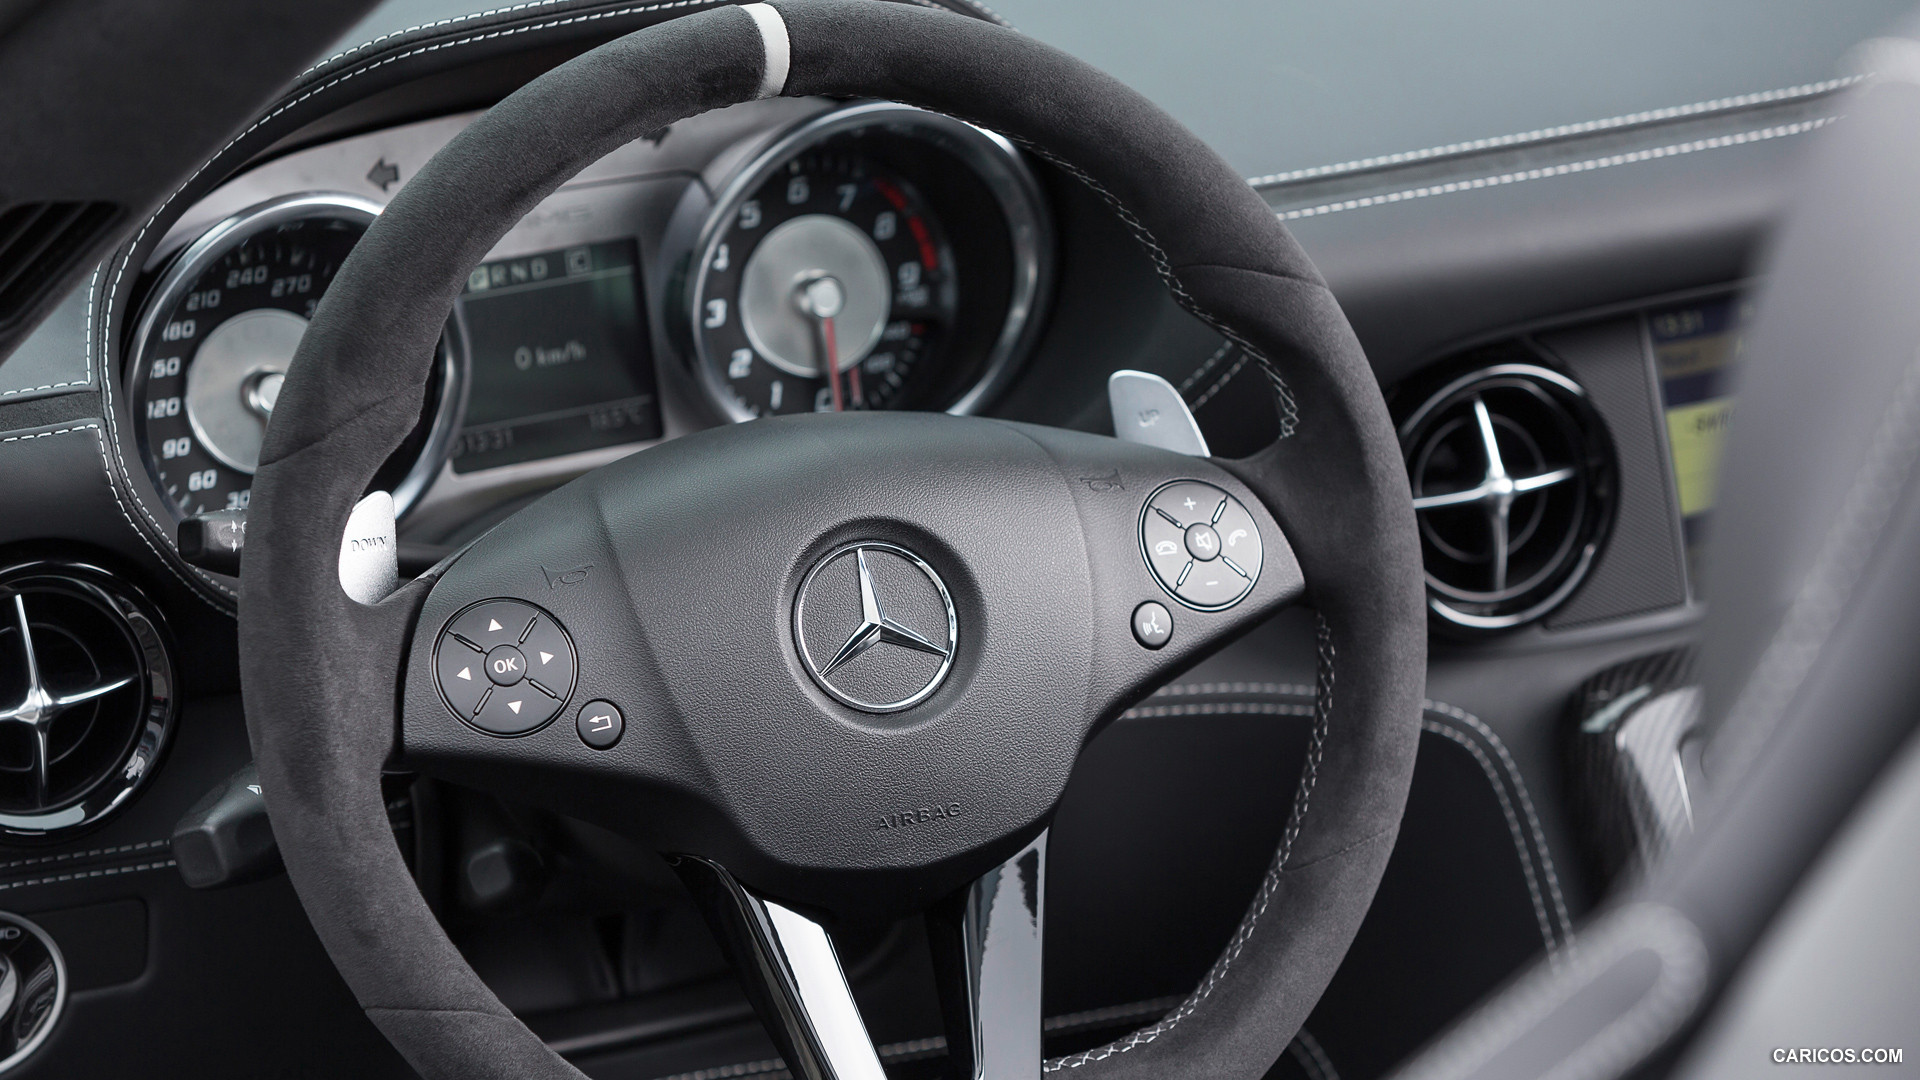 Hinh anh dau tien cua Mercedes-Benz SLS AMG GT 2015 